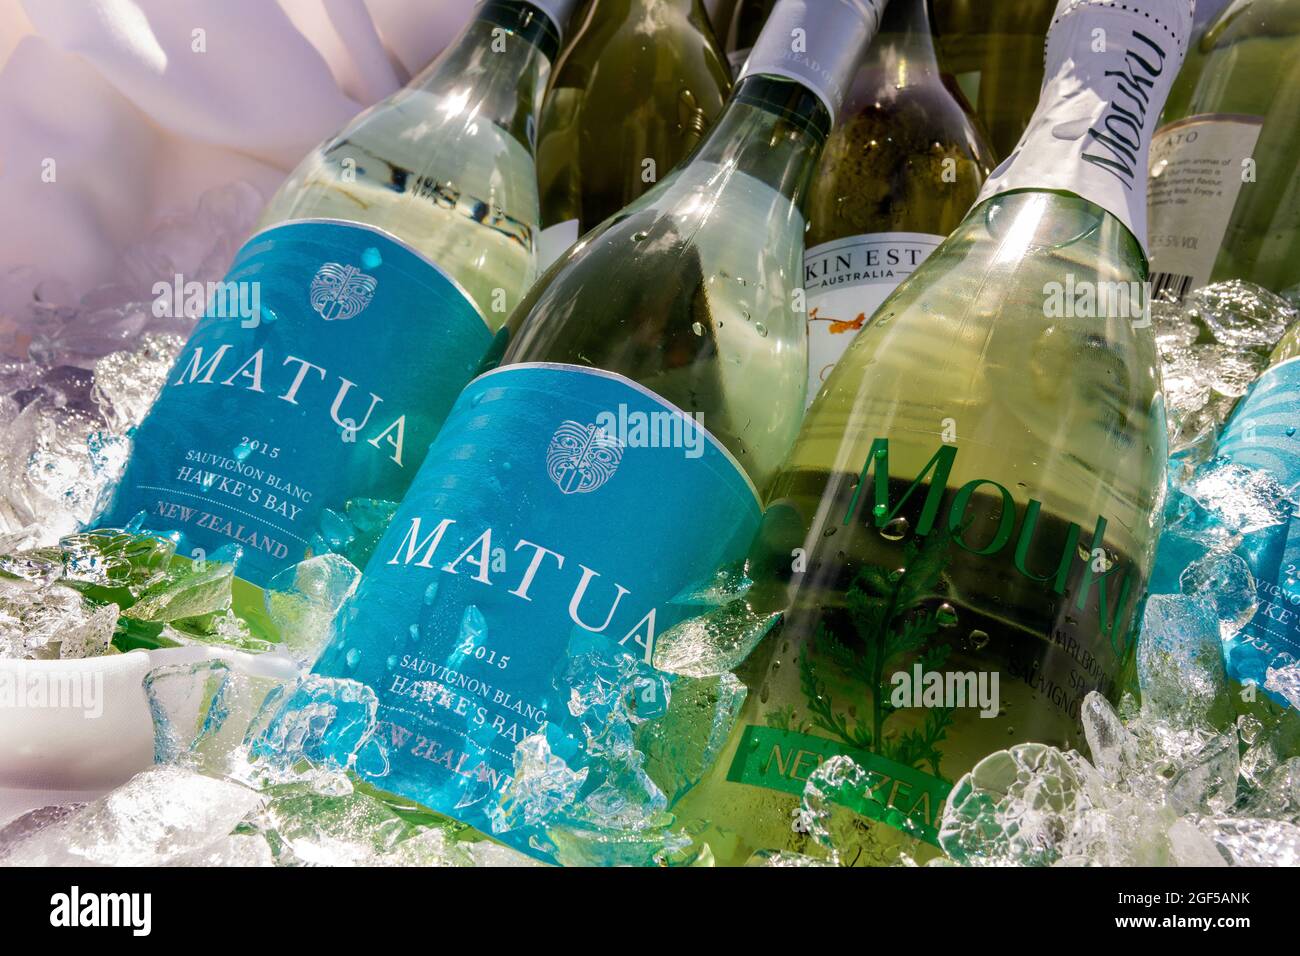 New Zealand Wine Bottles On Ice Matua Sauvignon Blanc In A Restaurant Auckland New Zealand Stock Photo